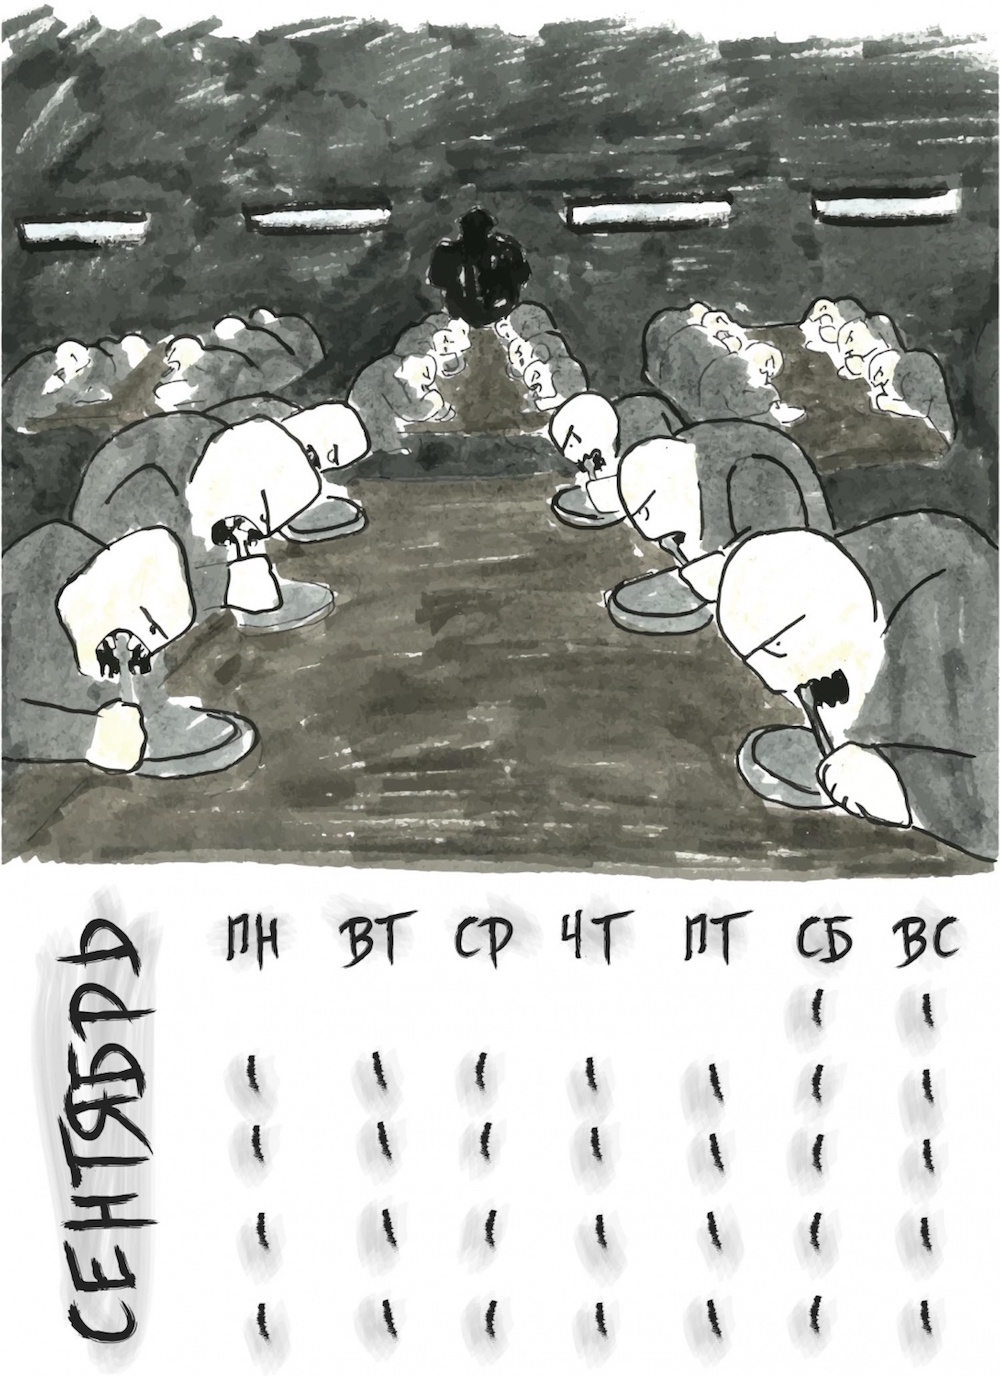 Calendar artwork by Oleg Navalny